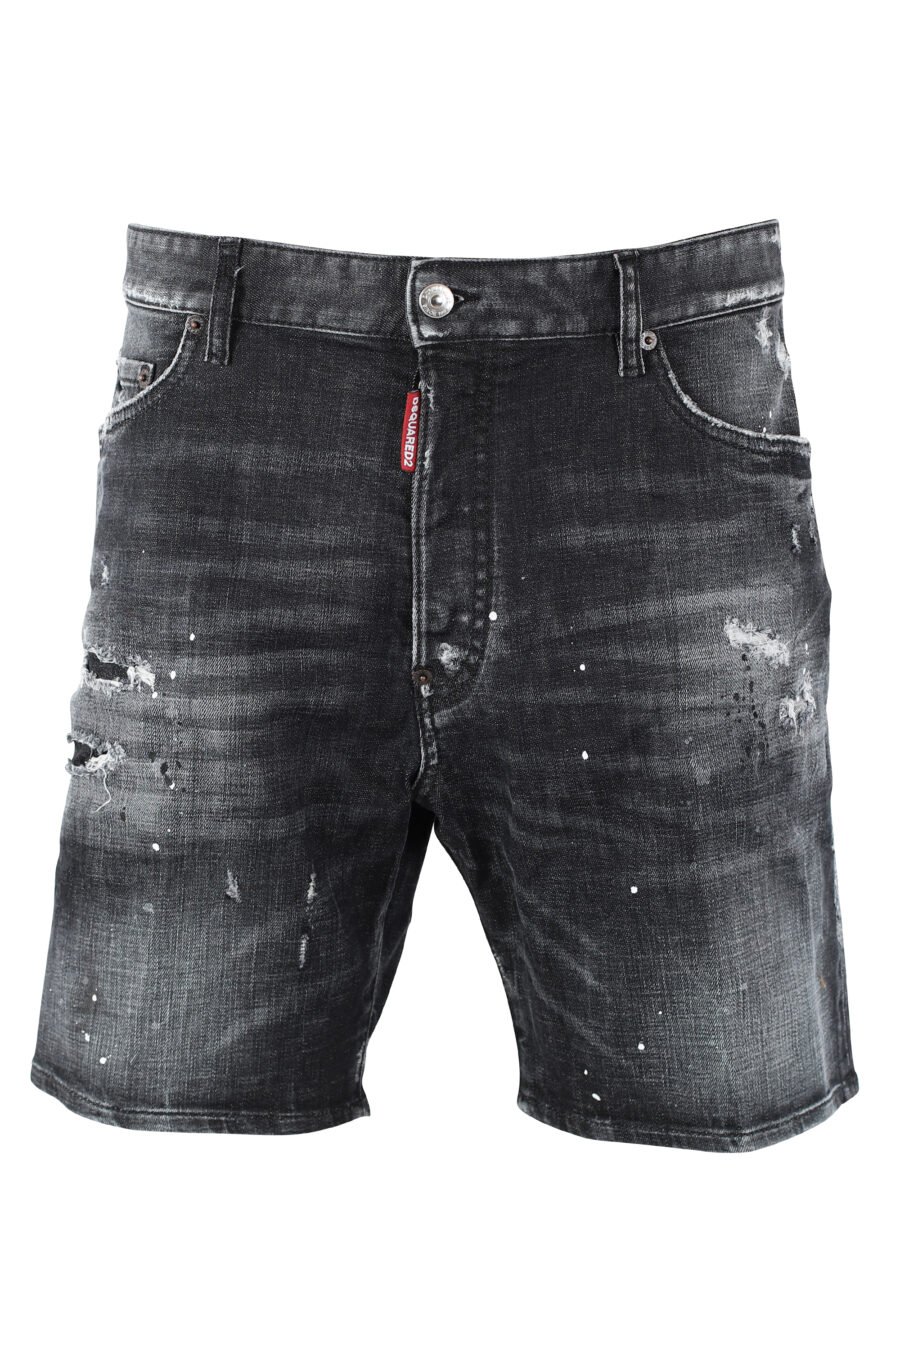 Pantalón vaquero corto "marine denim shorts" negros desgastados con rotos - IMG 9728